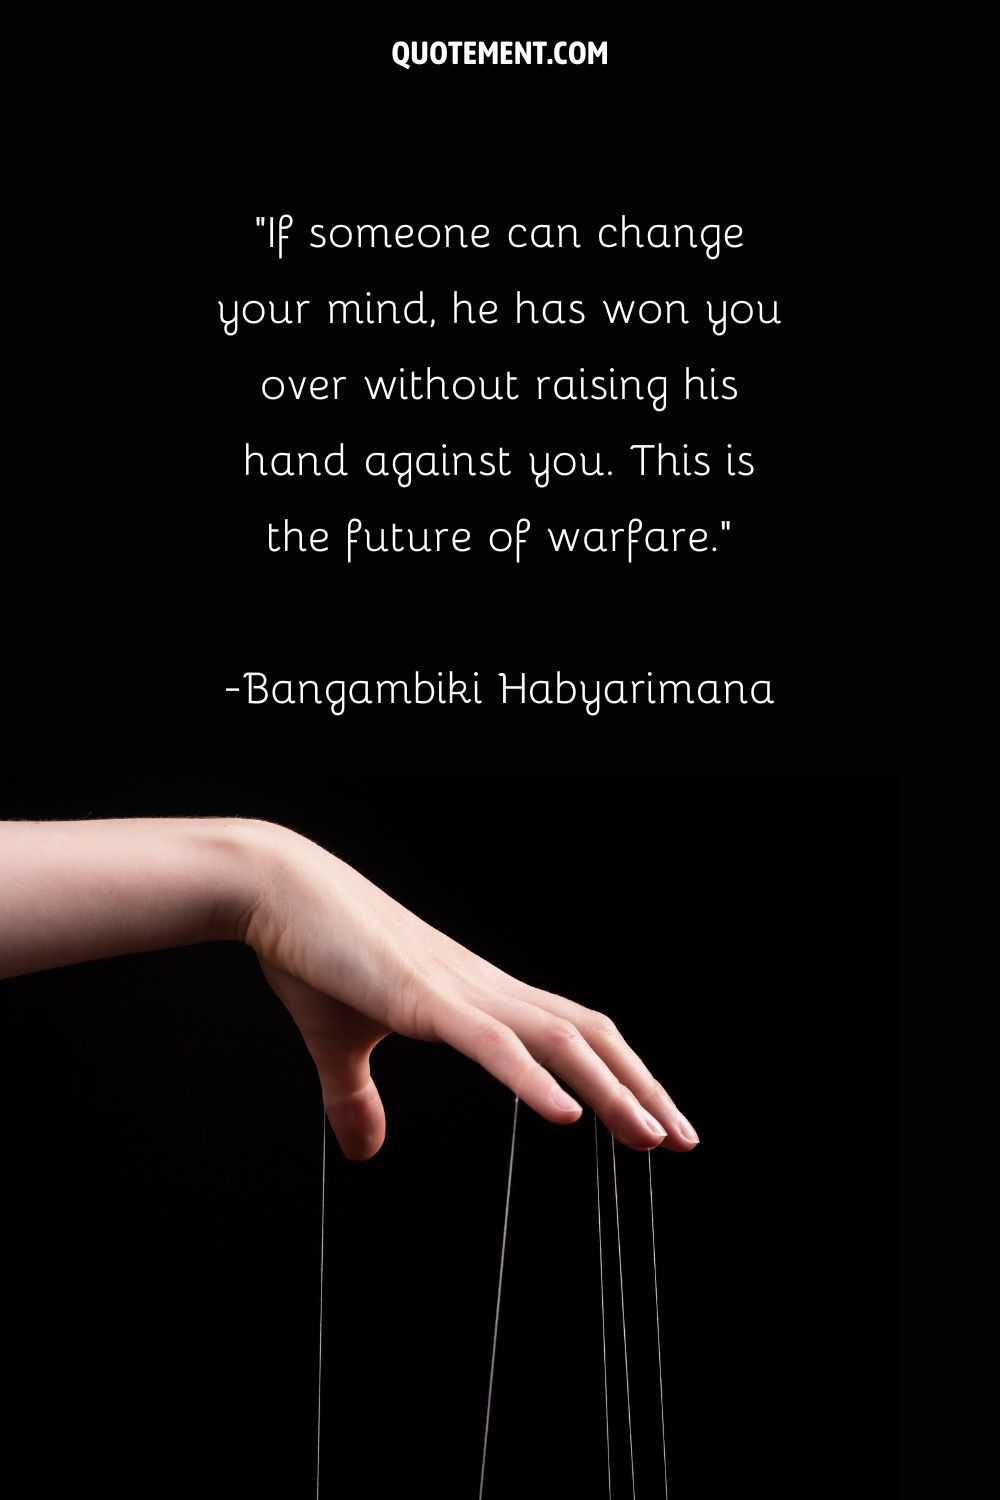 future of warfare quote by Bangambiki Habyarimana